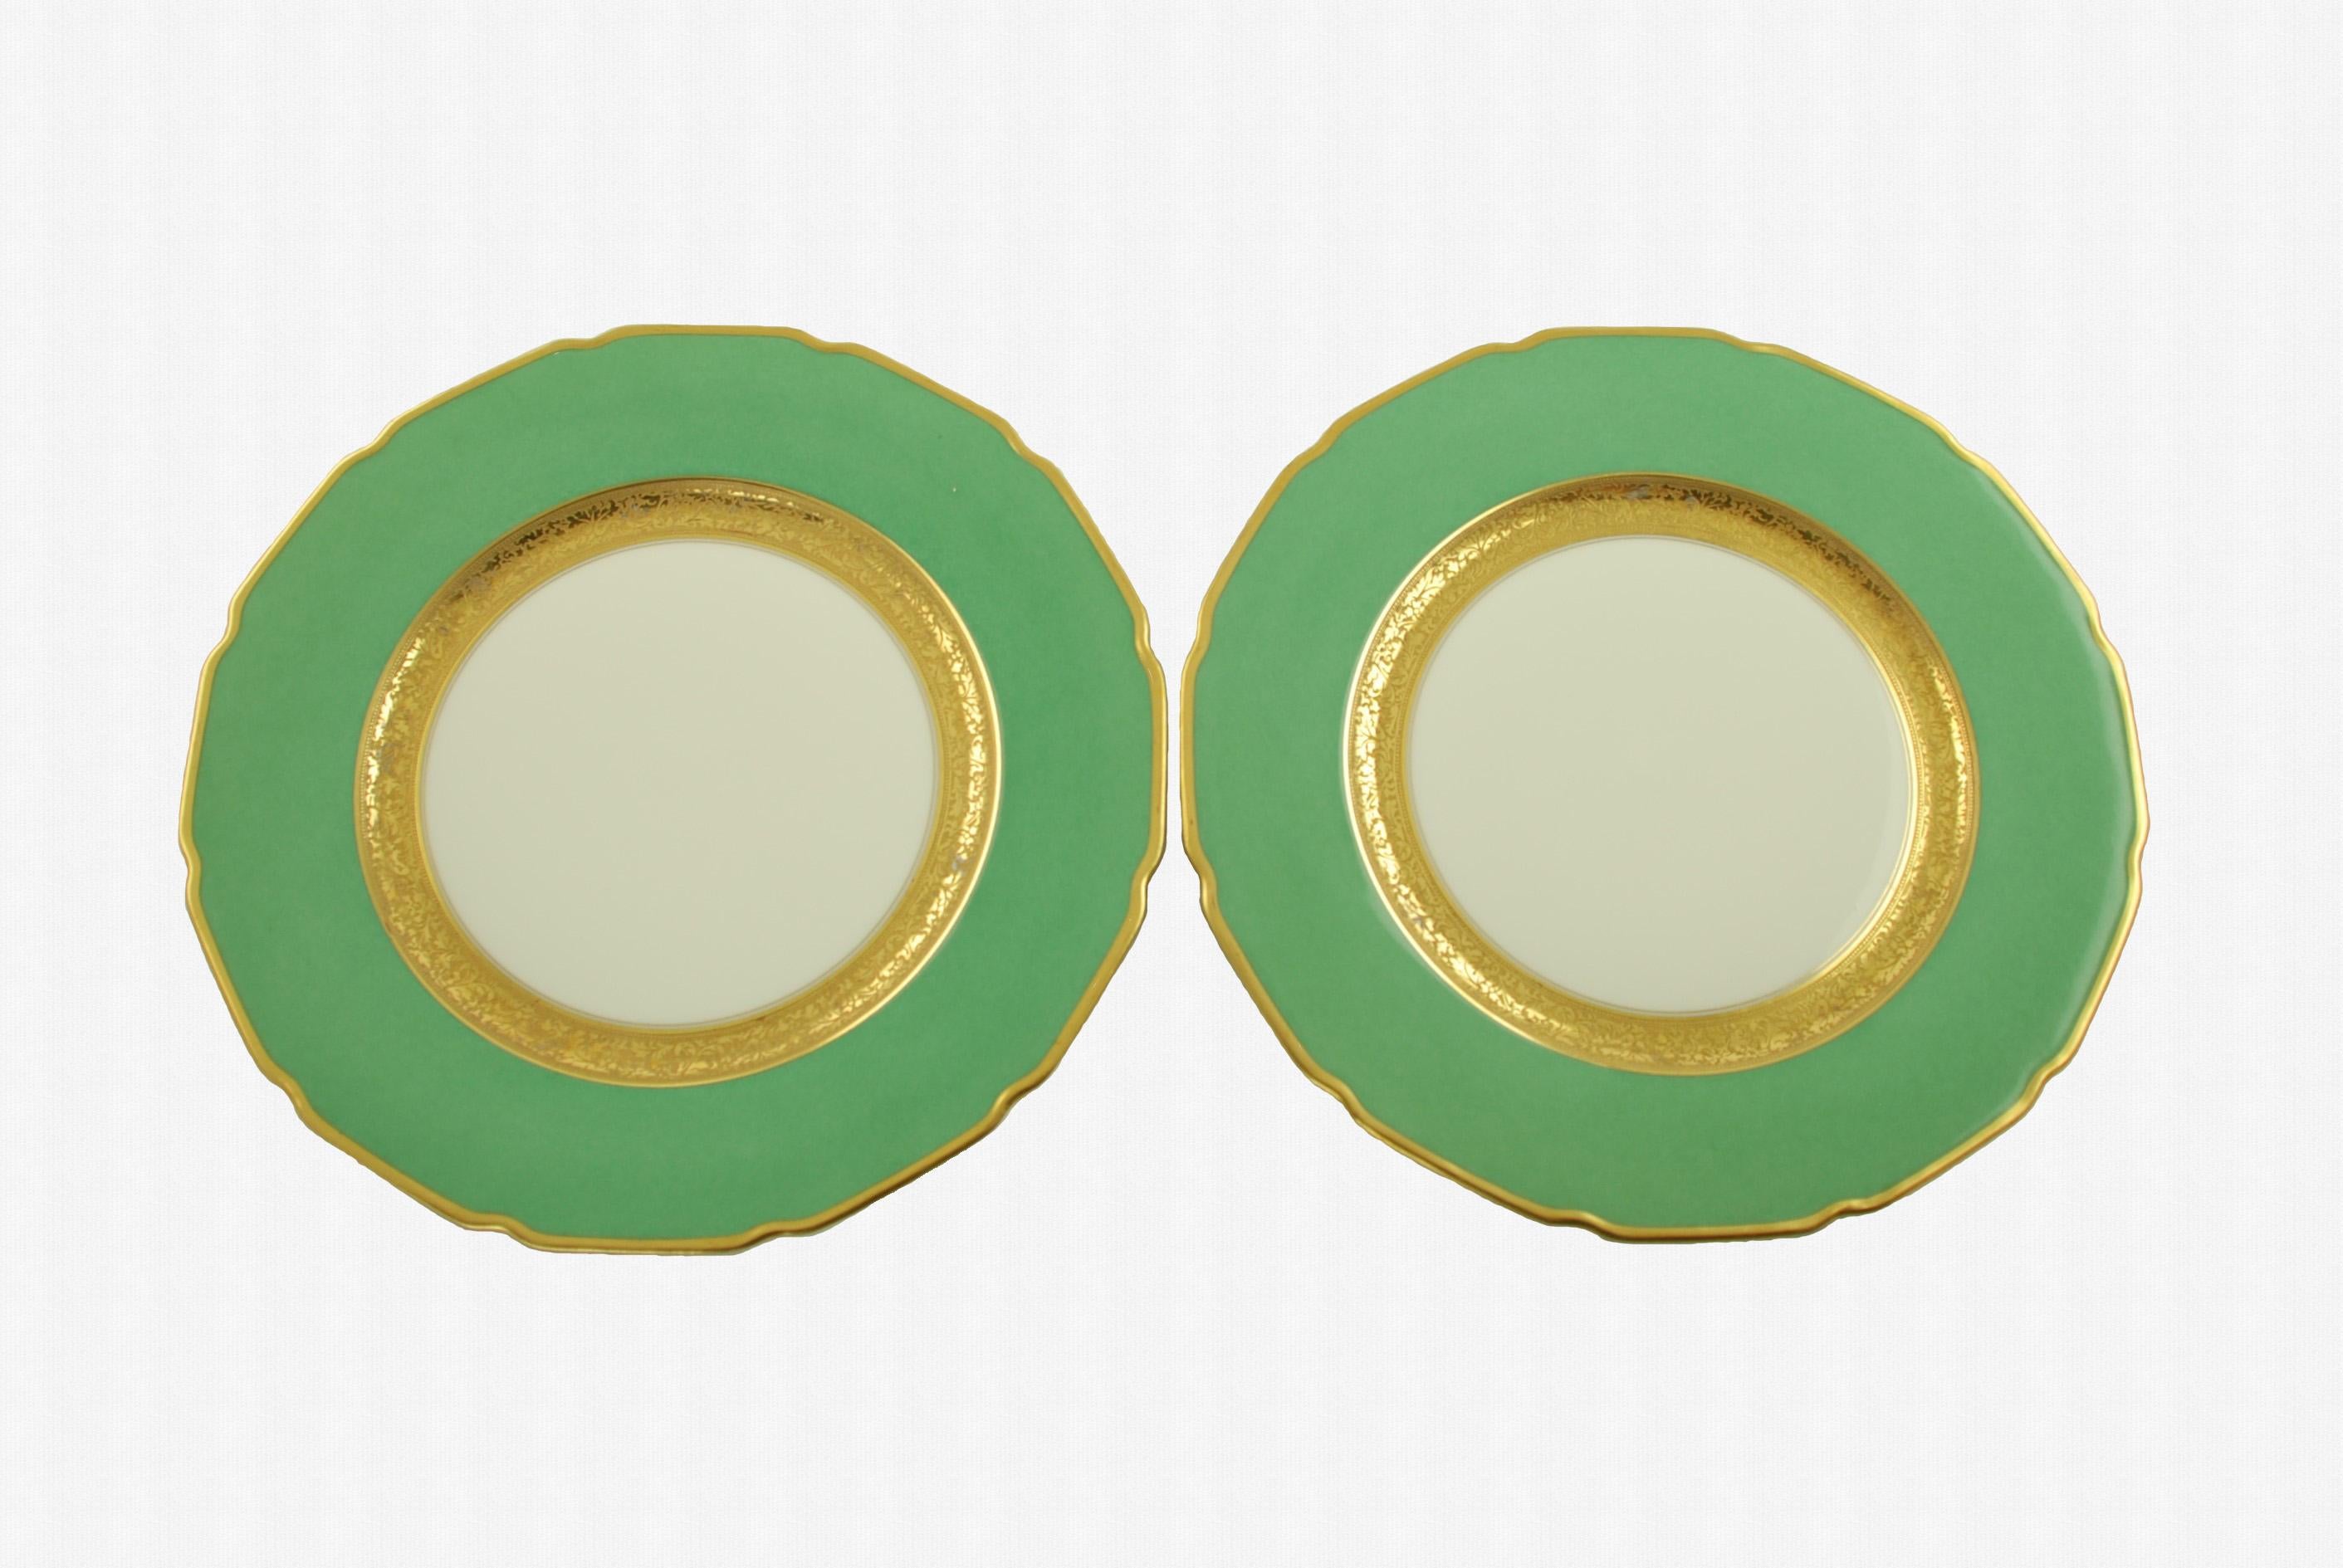 19th Century Antique Tressemanes & Vogt Porcelain Dinner Plates with Green Band and Gilt Trim